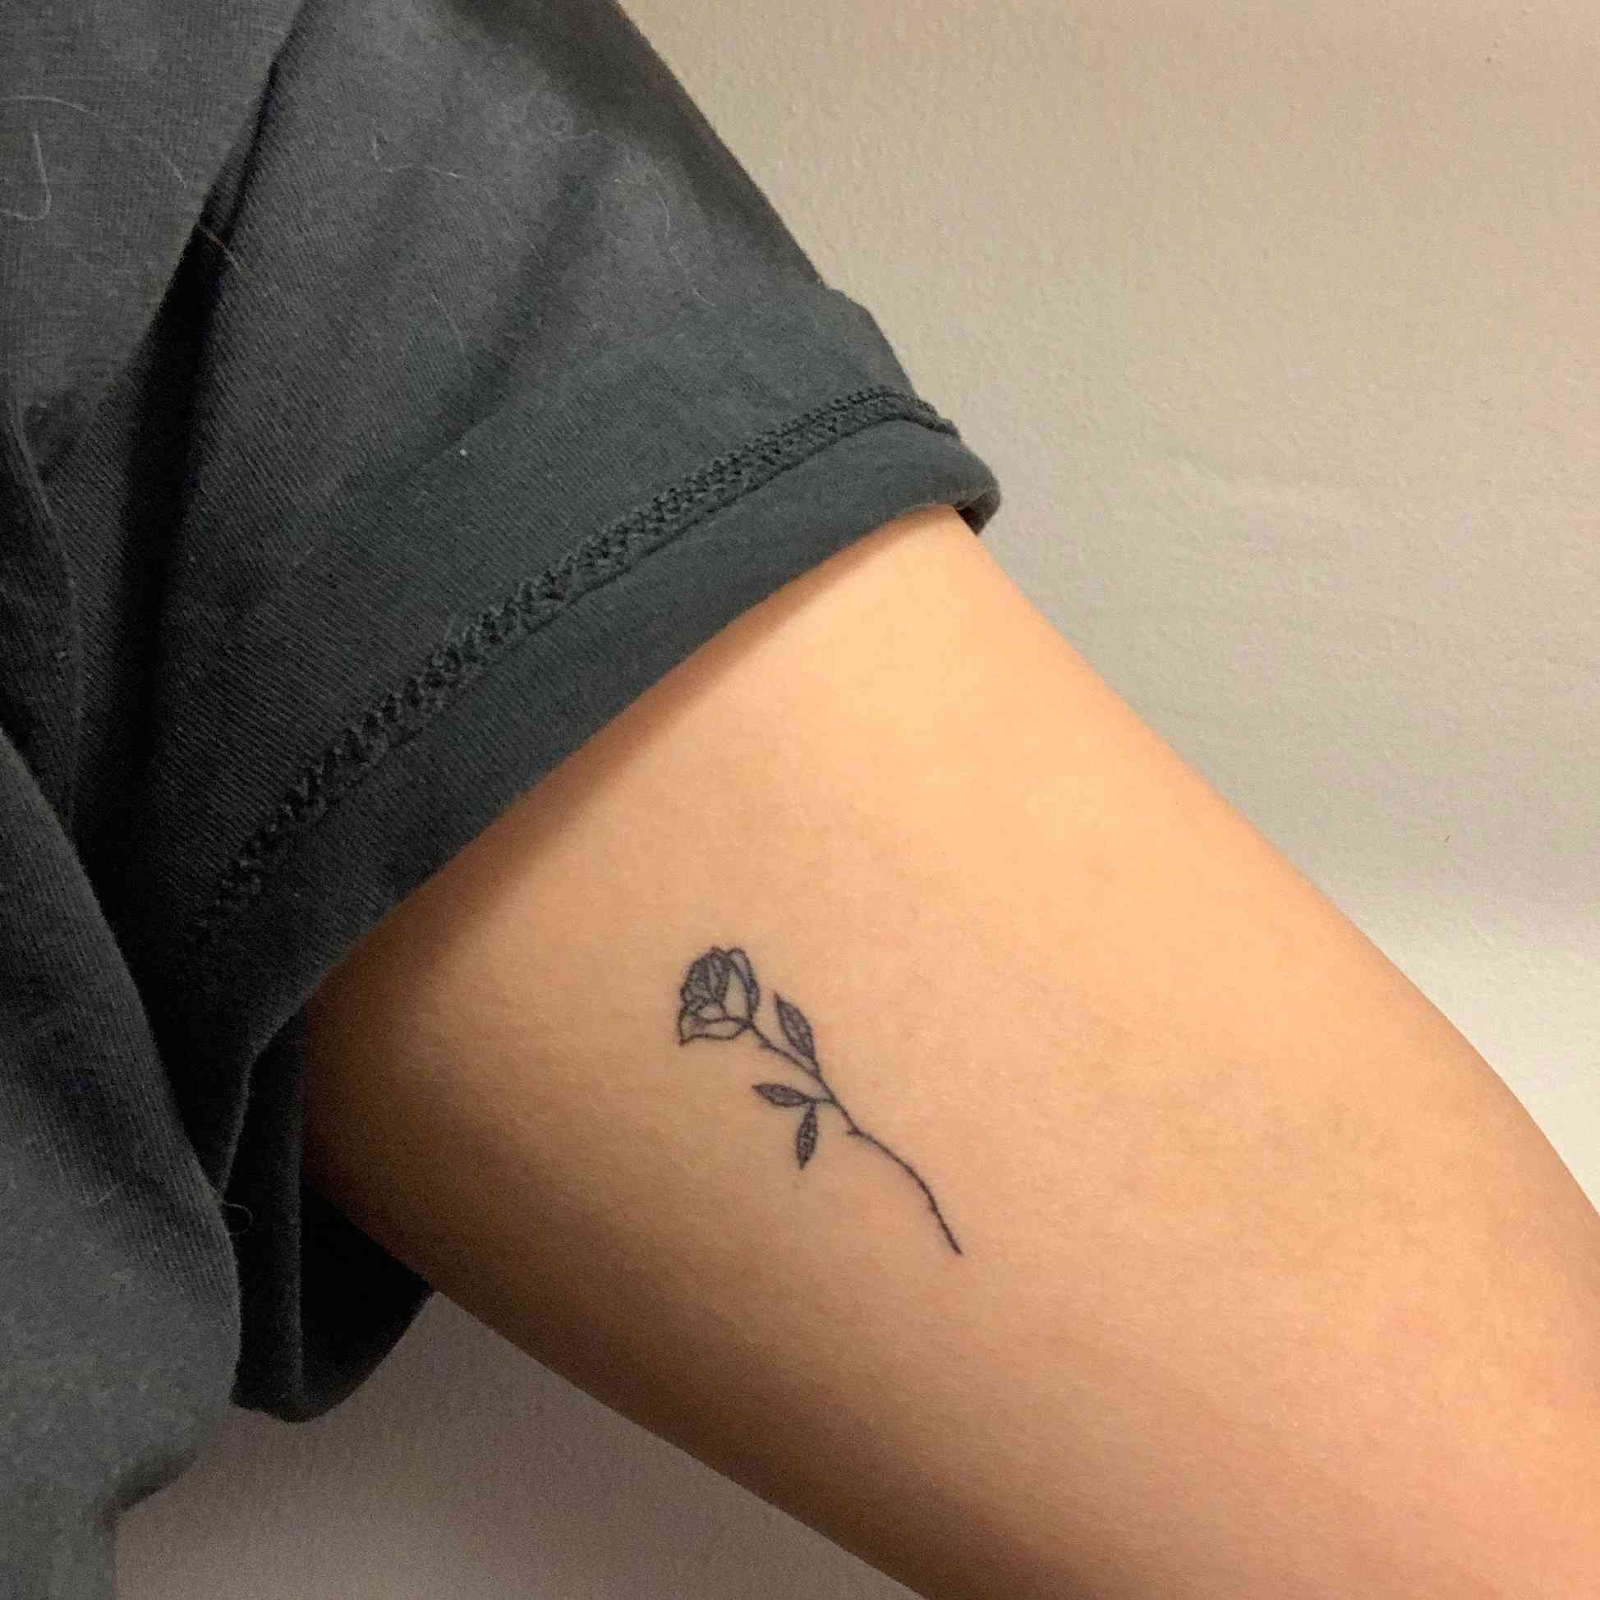 The rose tattoo